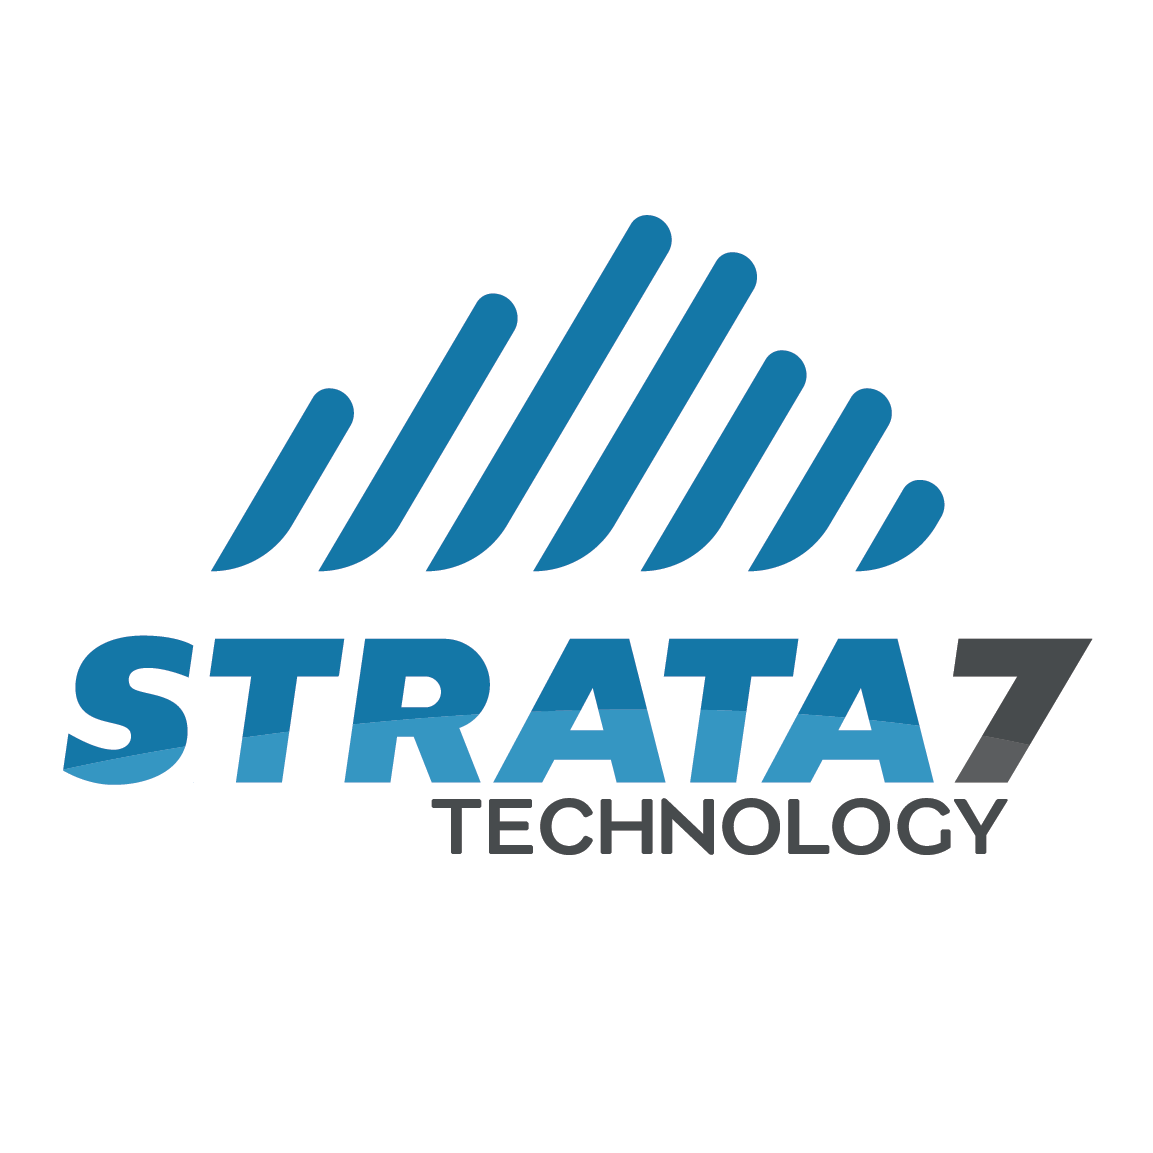 STRATA7 Technology Logo